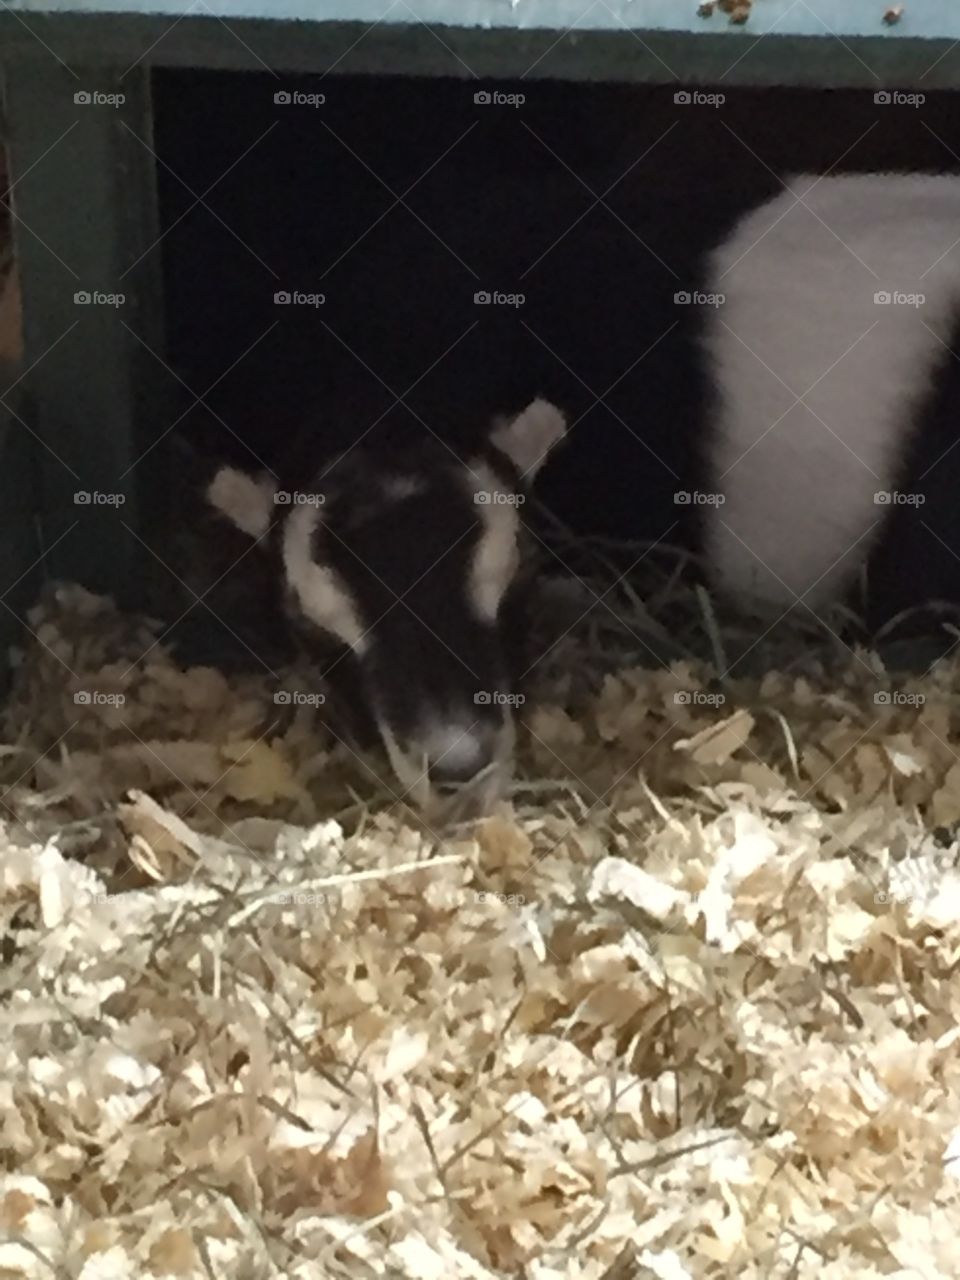 A sleeping baby goat.